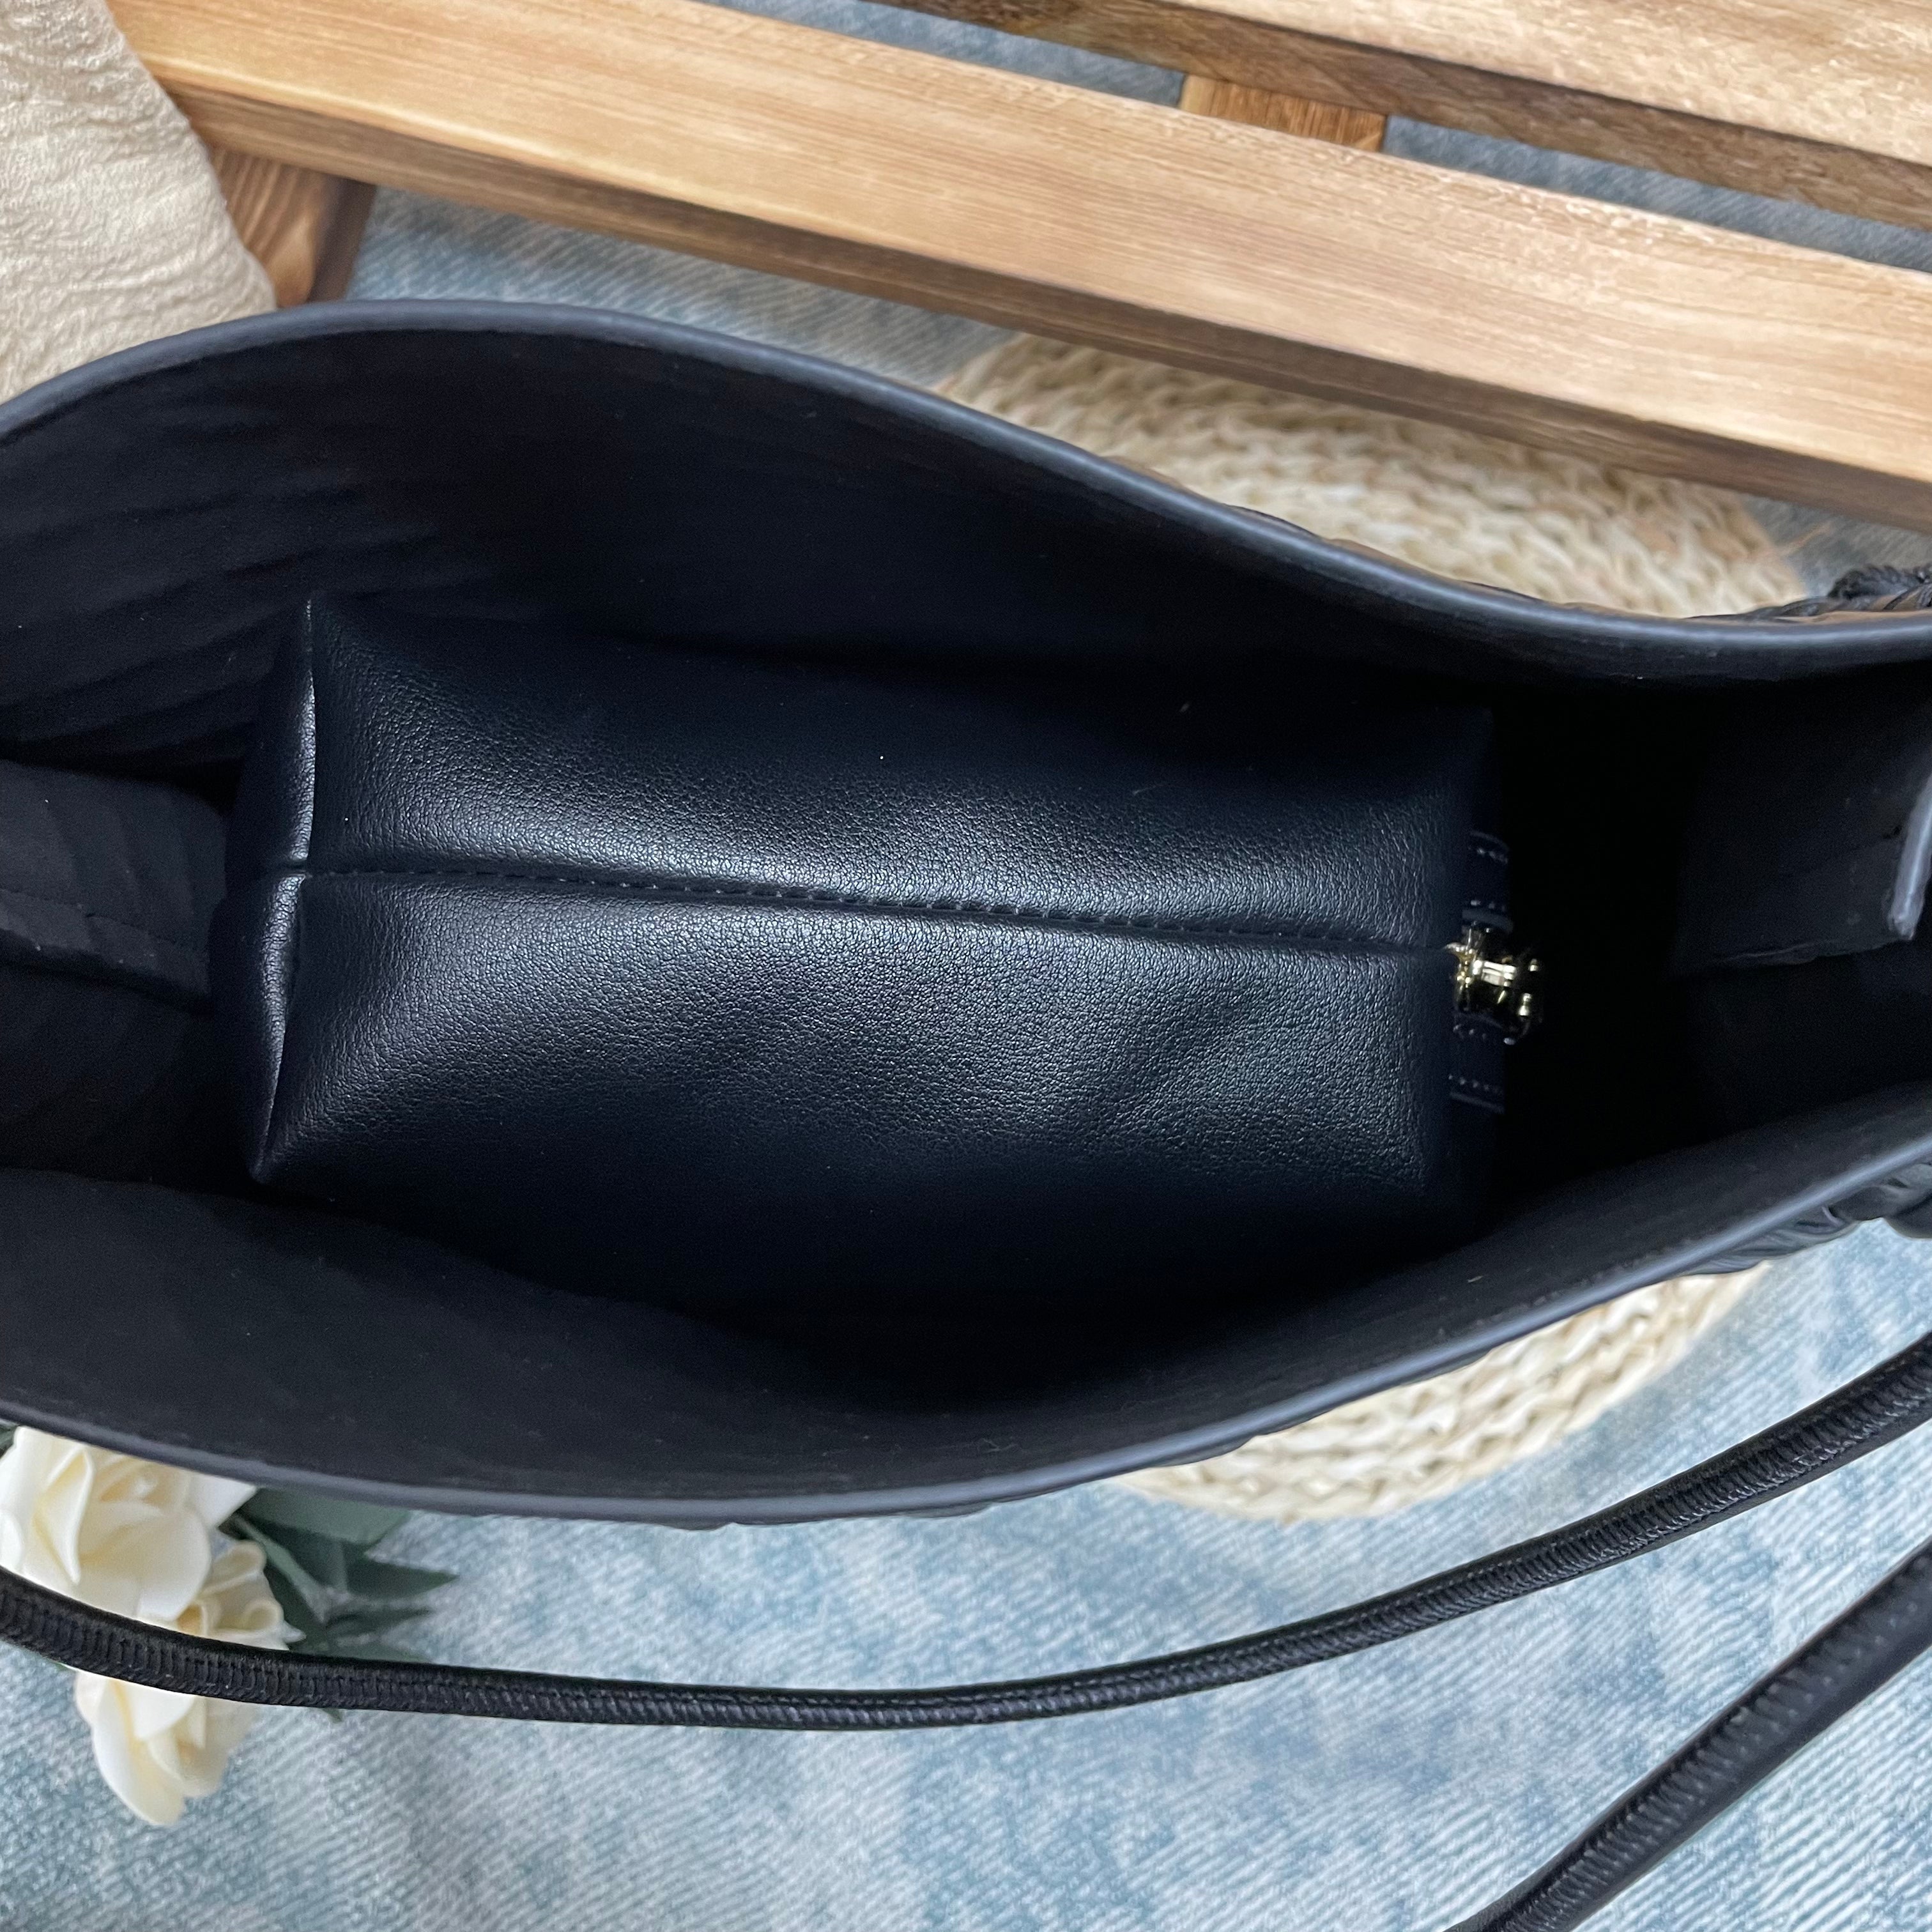 Woven Tote Leather Bag | Style trendy cowhide woven shoulder bag | Minimalist Women Handbag | Knot Woven Bag | Knot Woven Bag